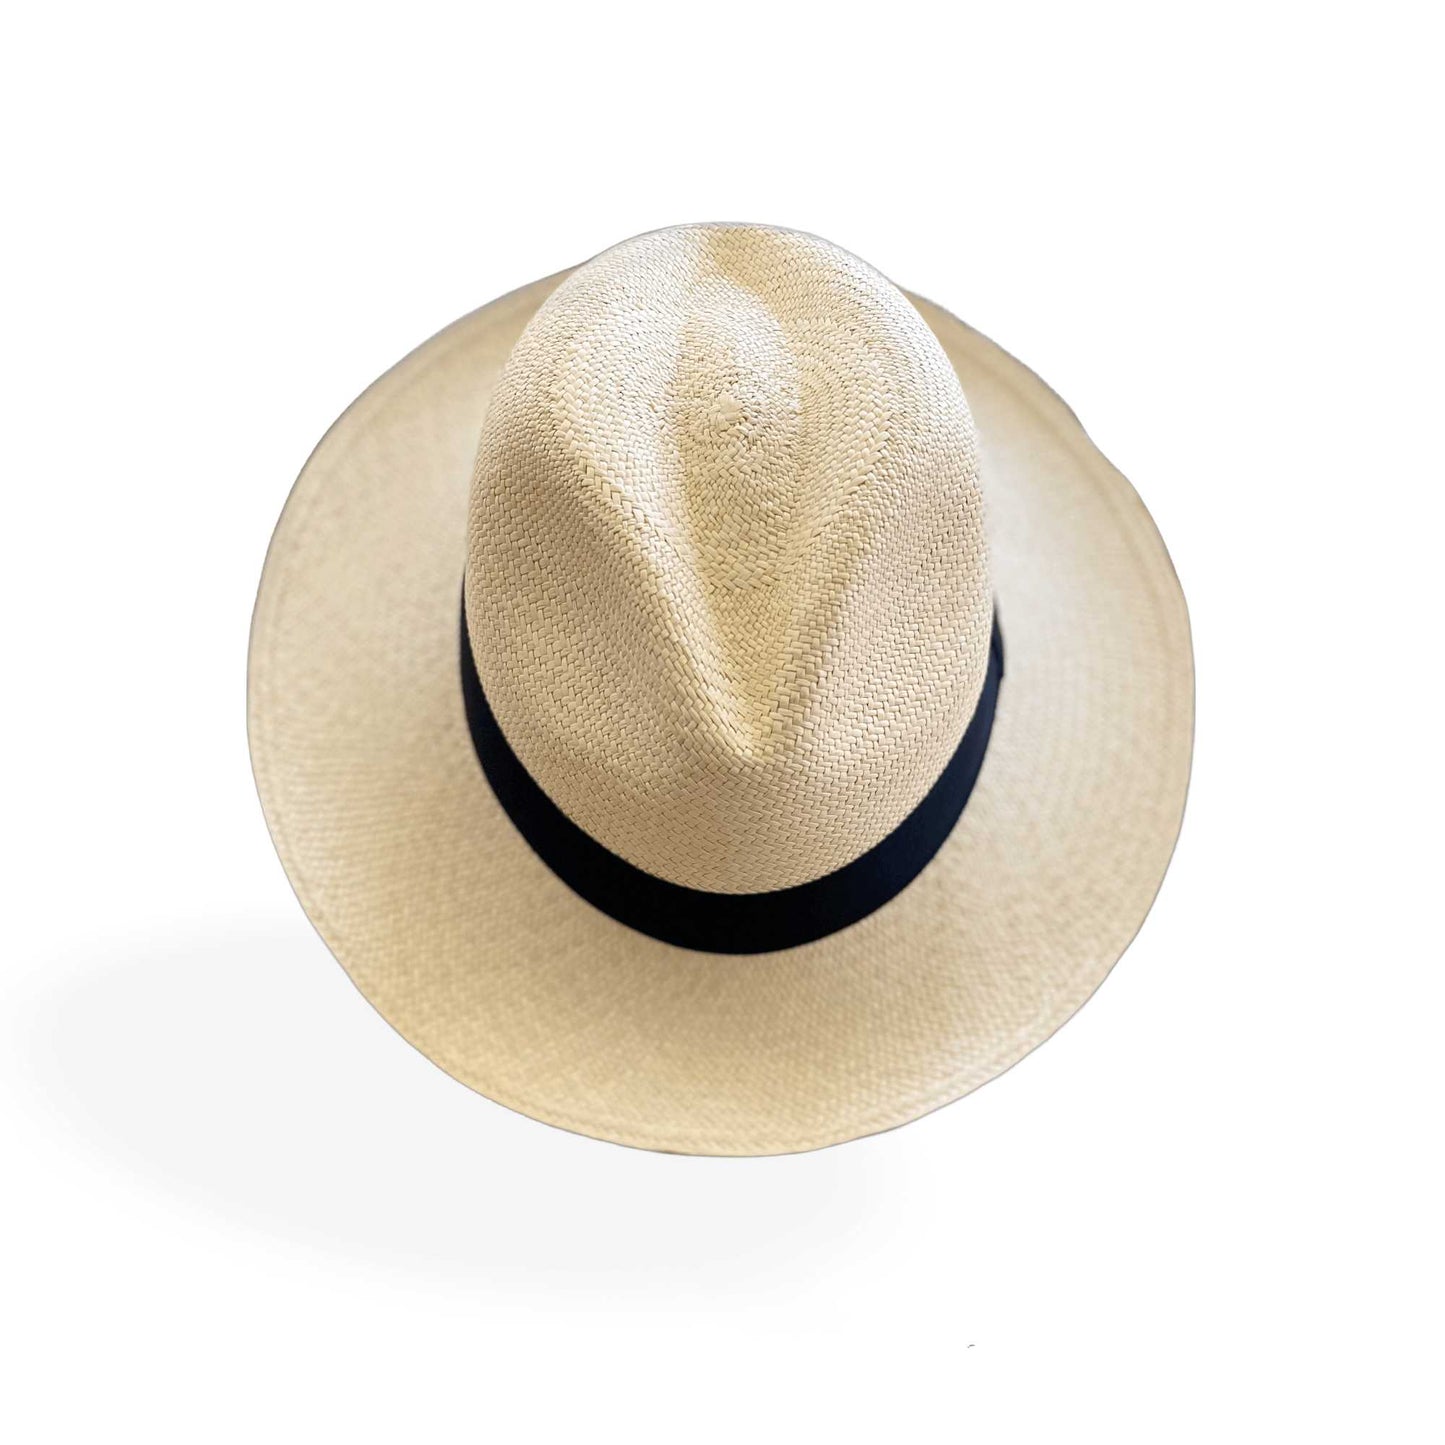 Original Classic Panama Straw Hats | Handmade Straw Hat - The Hip Hat 